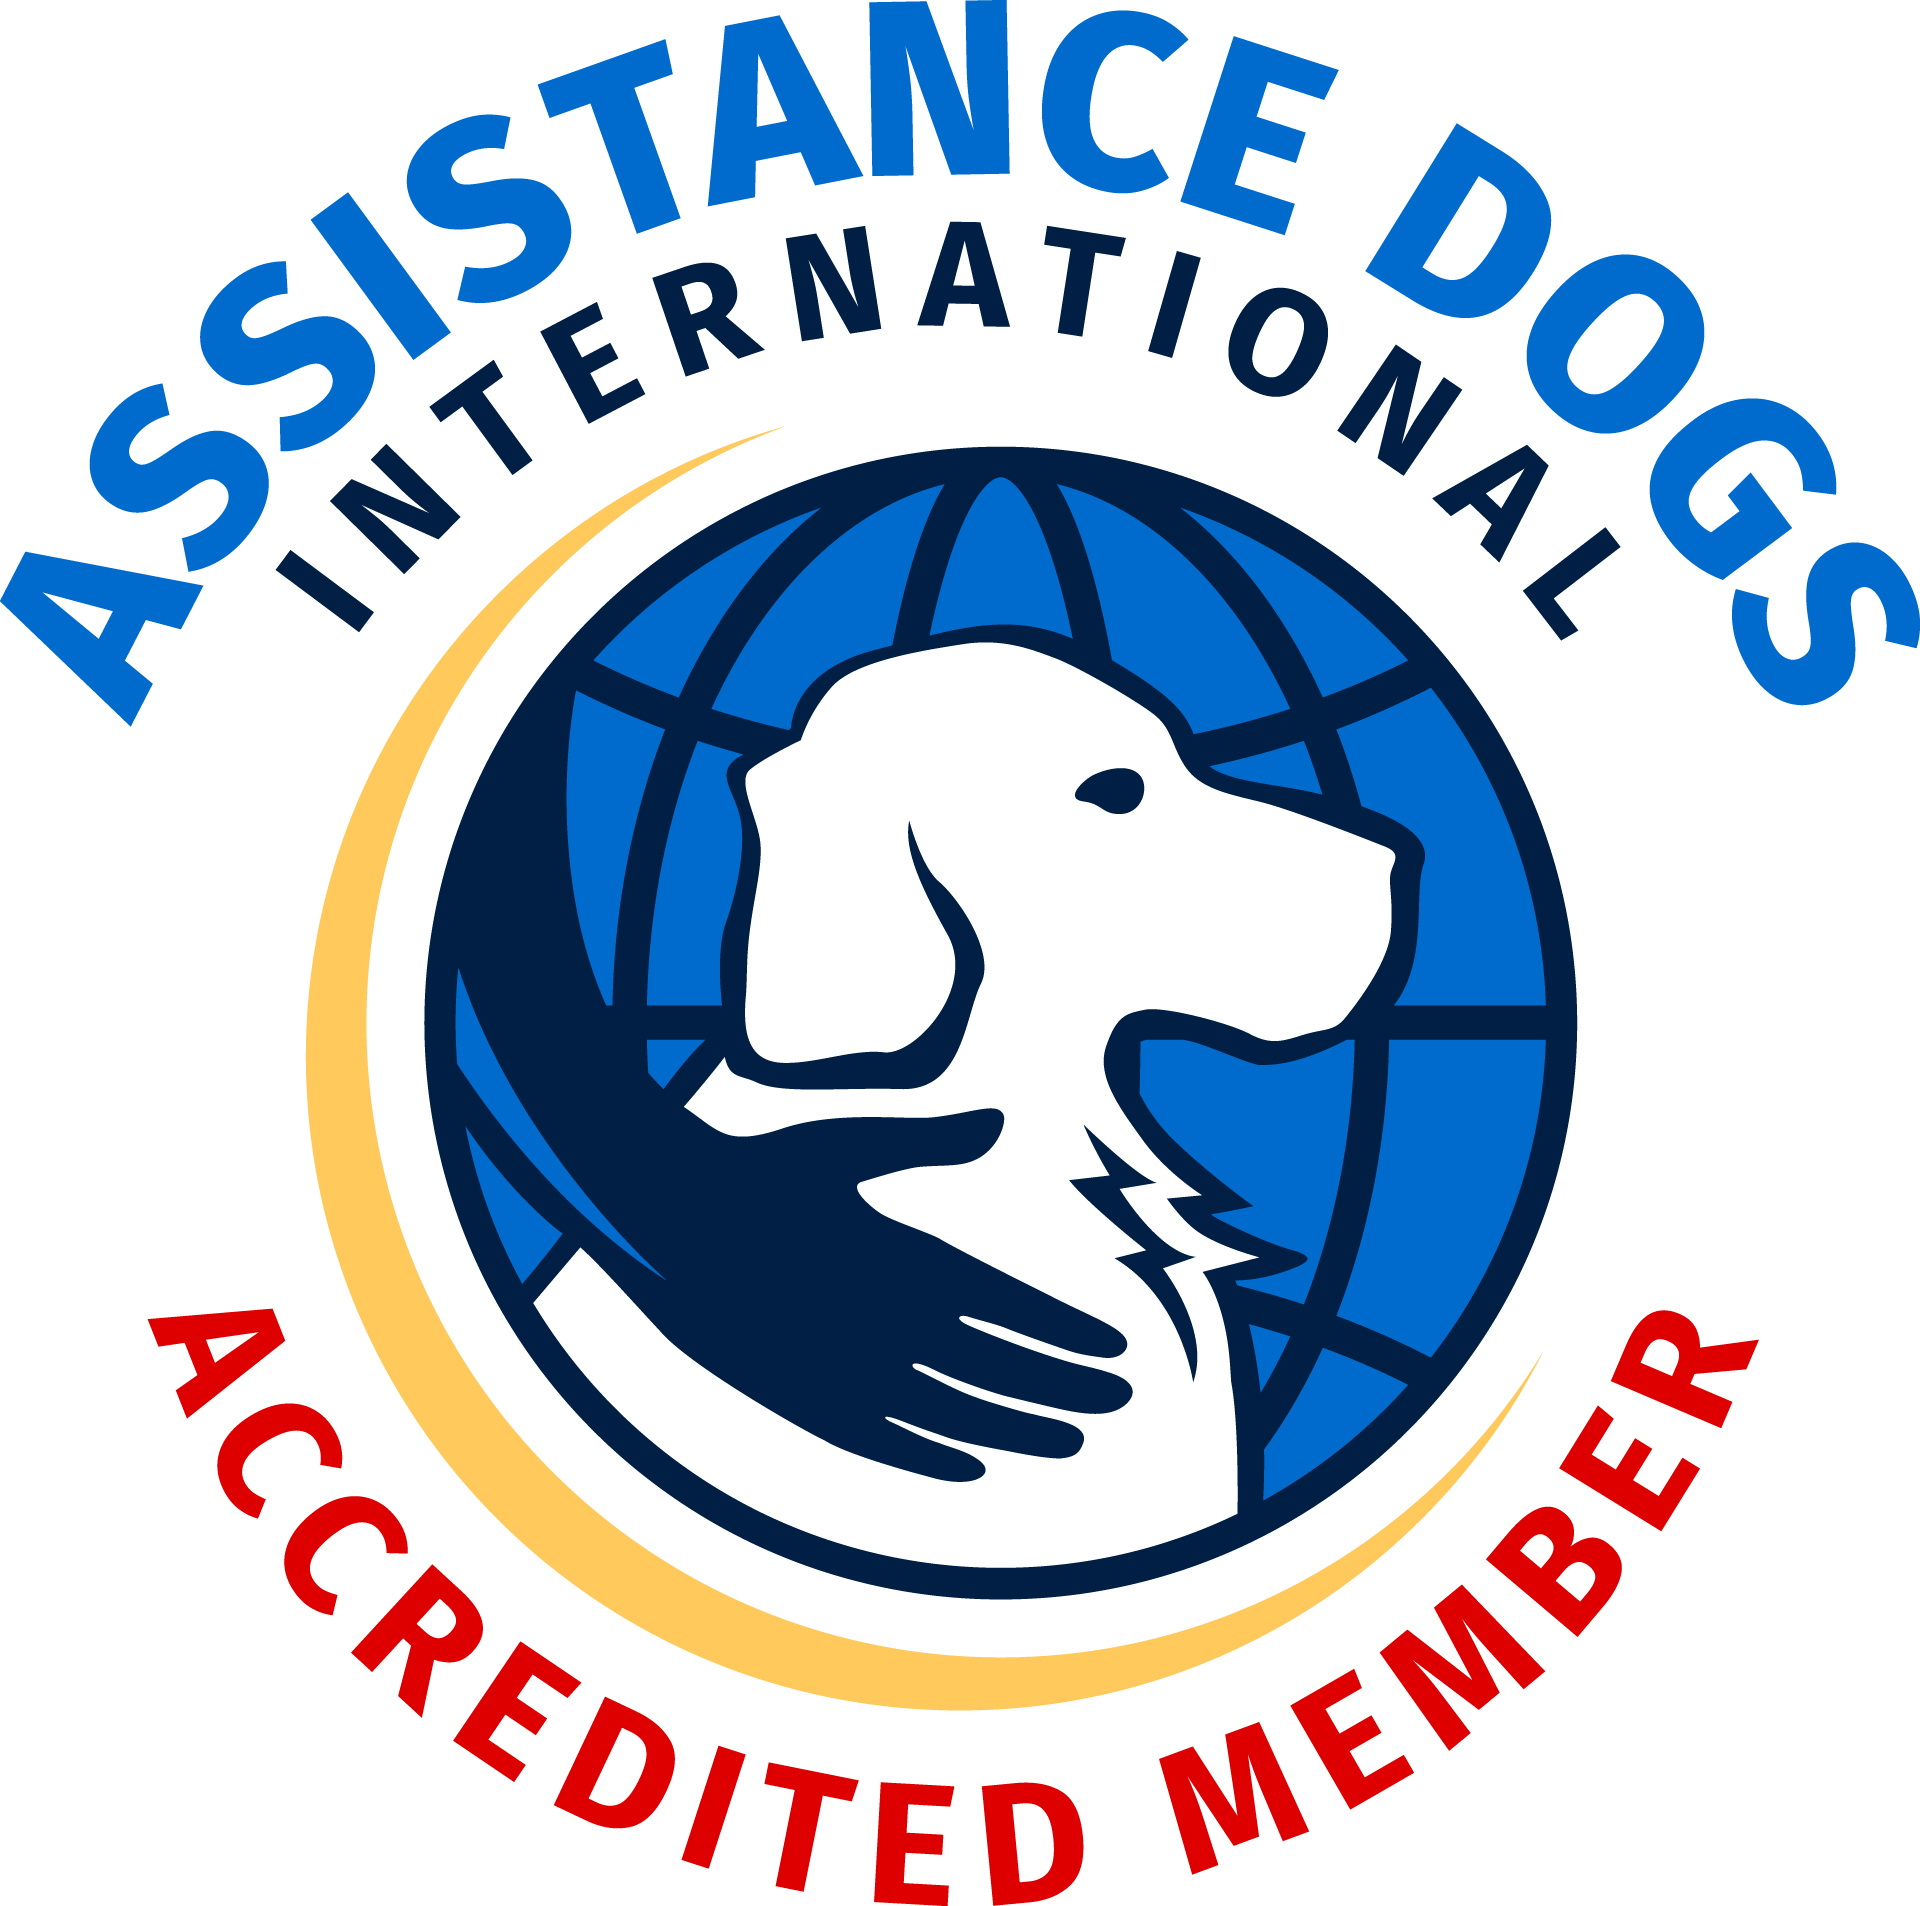 ADI accredited circle logo